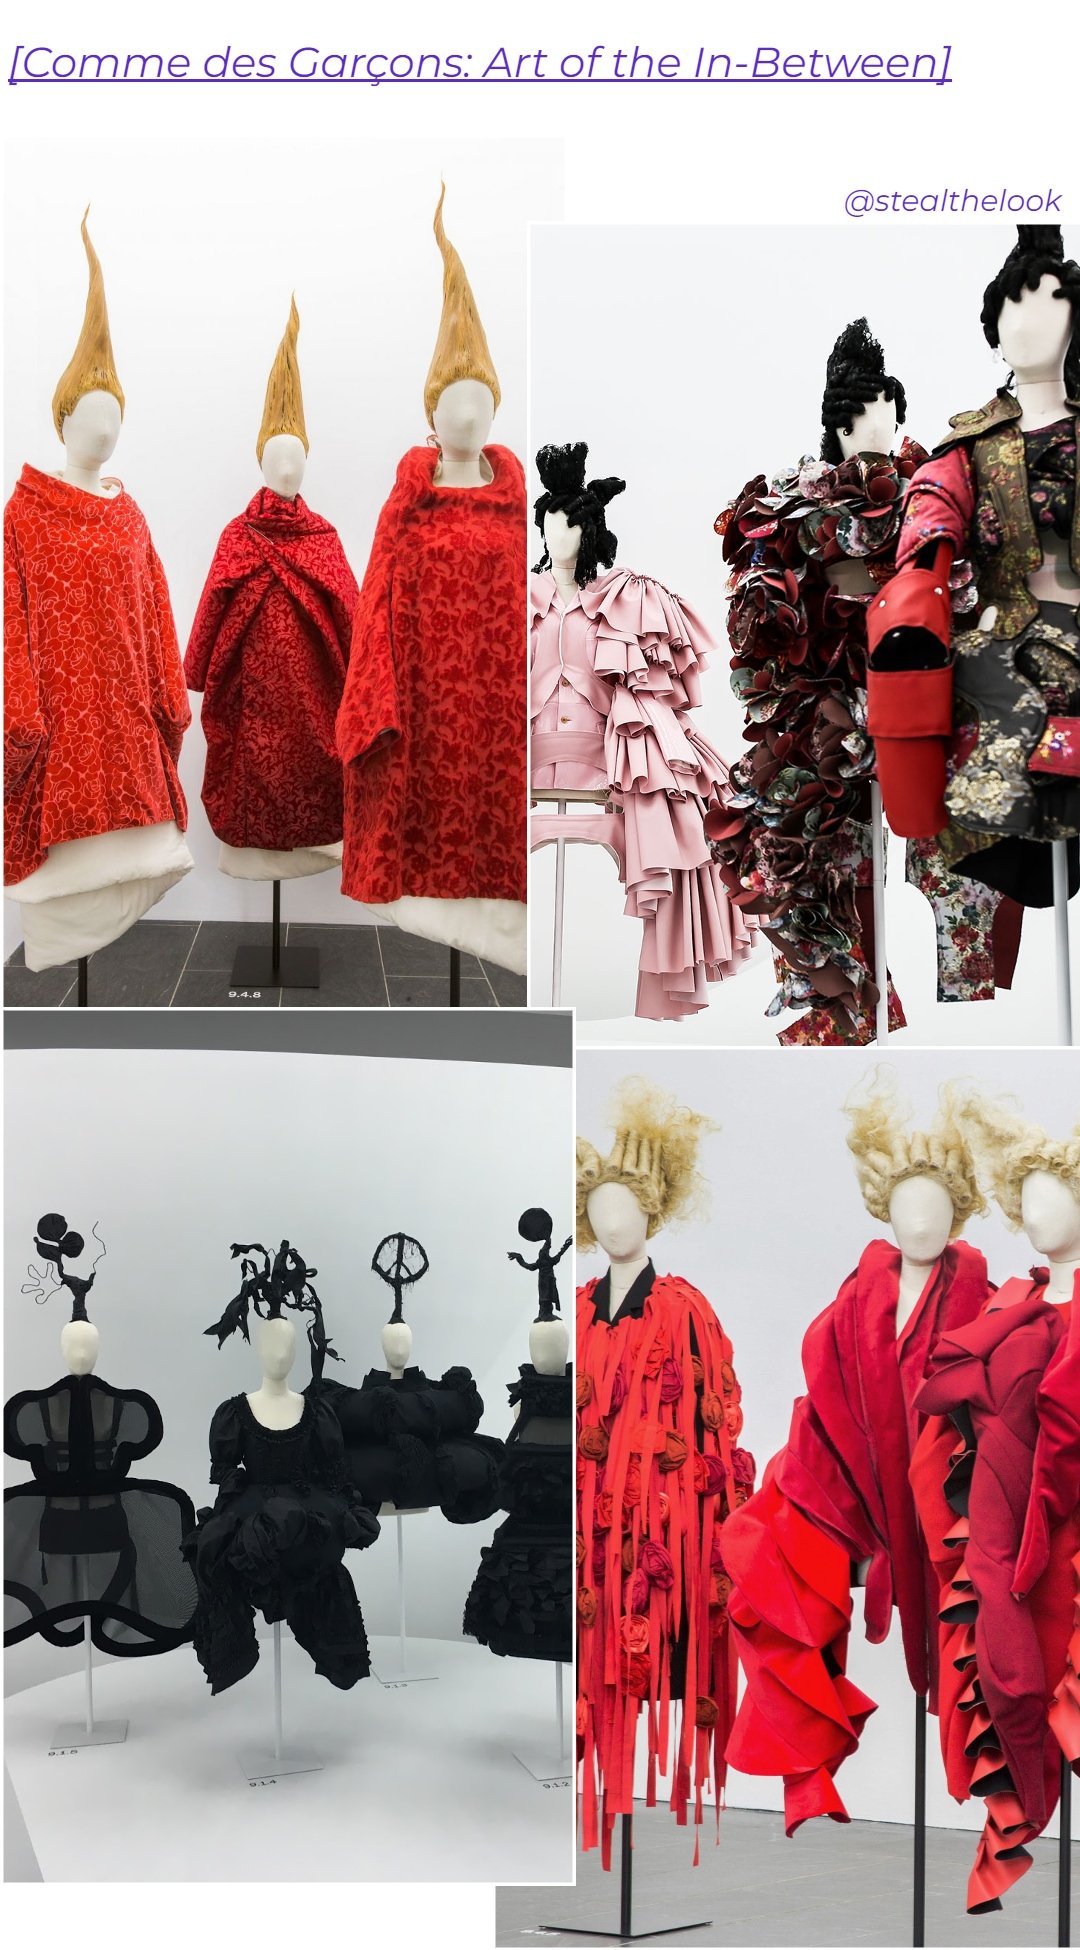 Rei Kawakubo/Comme des Garçons: Art of the In-Between - roupas diversas - asiáticos na moda - inverno - colagem de imagens - https://stealthelook.com.br